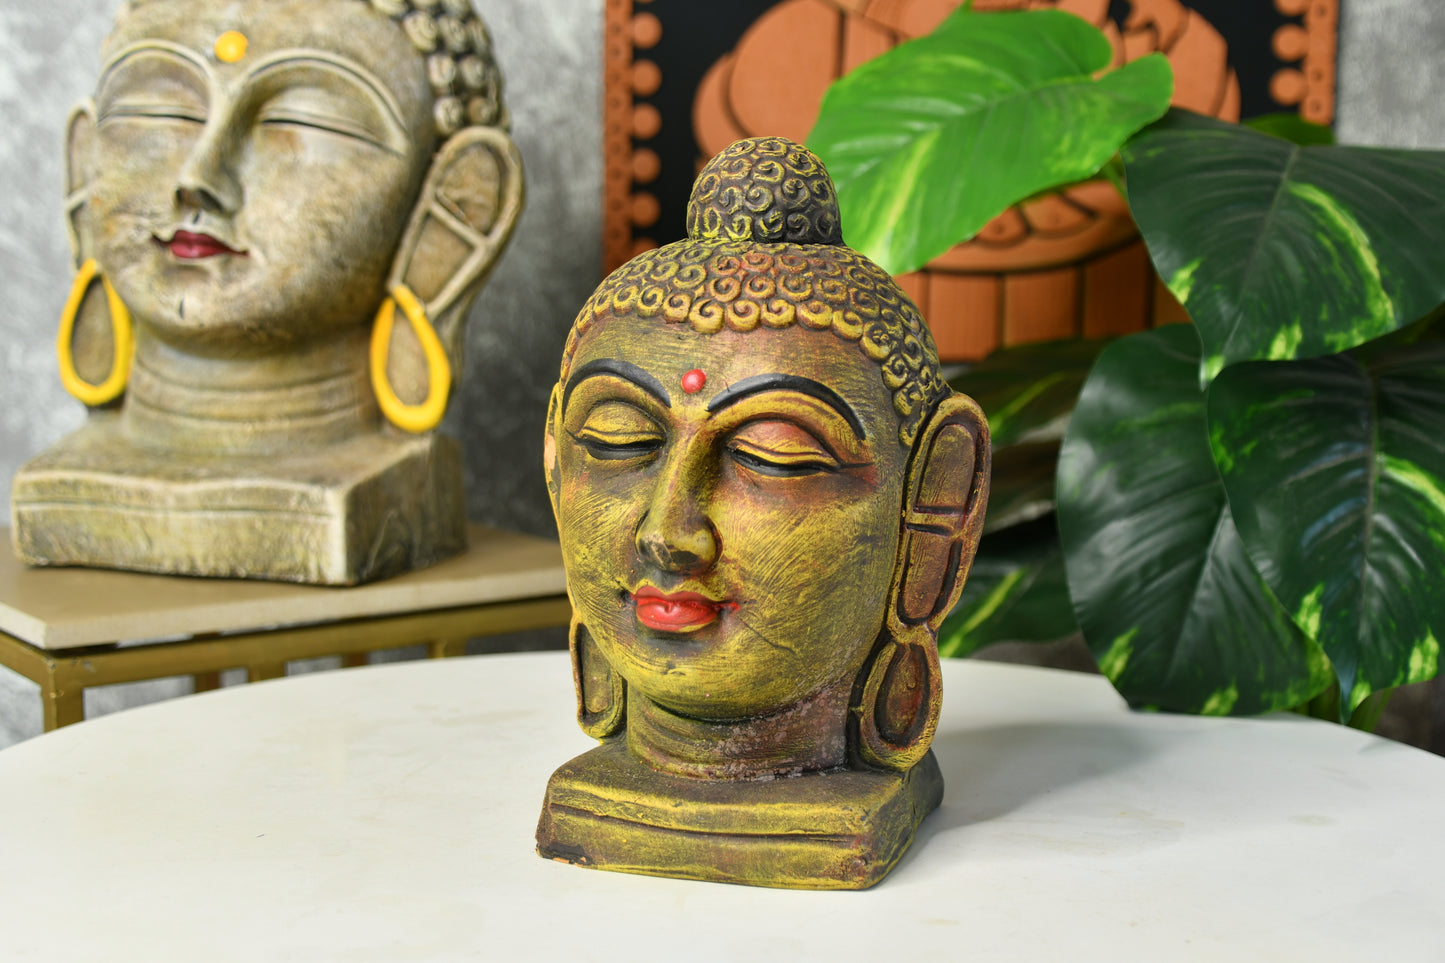 Sowpeace Large Terracotta Buddha Head: Artisan Tabletop Decor